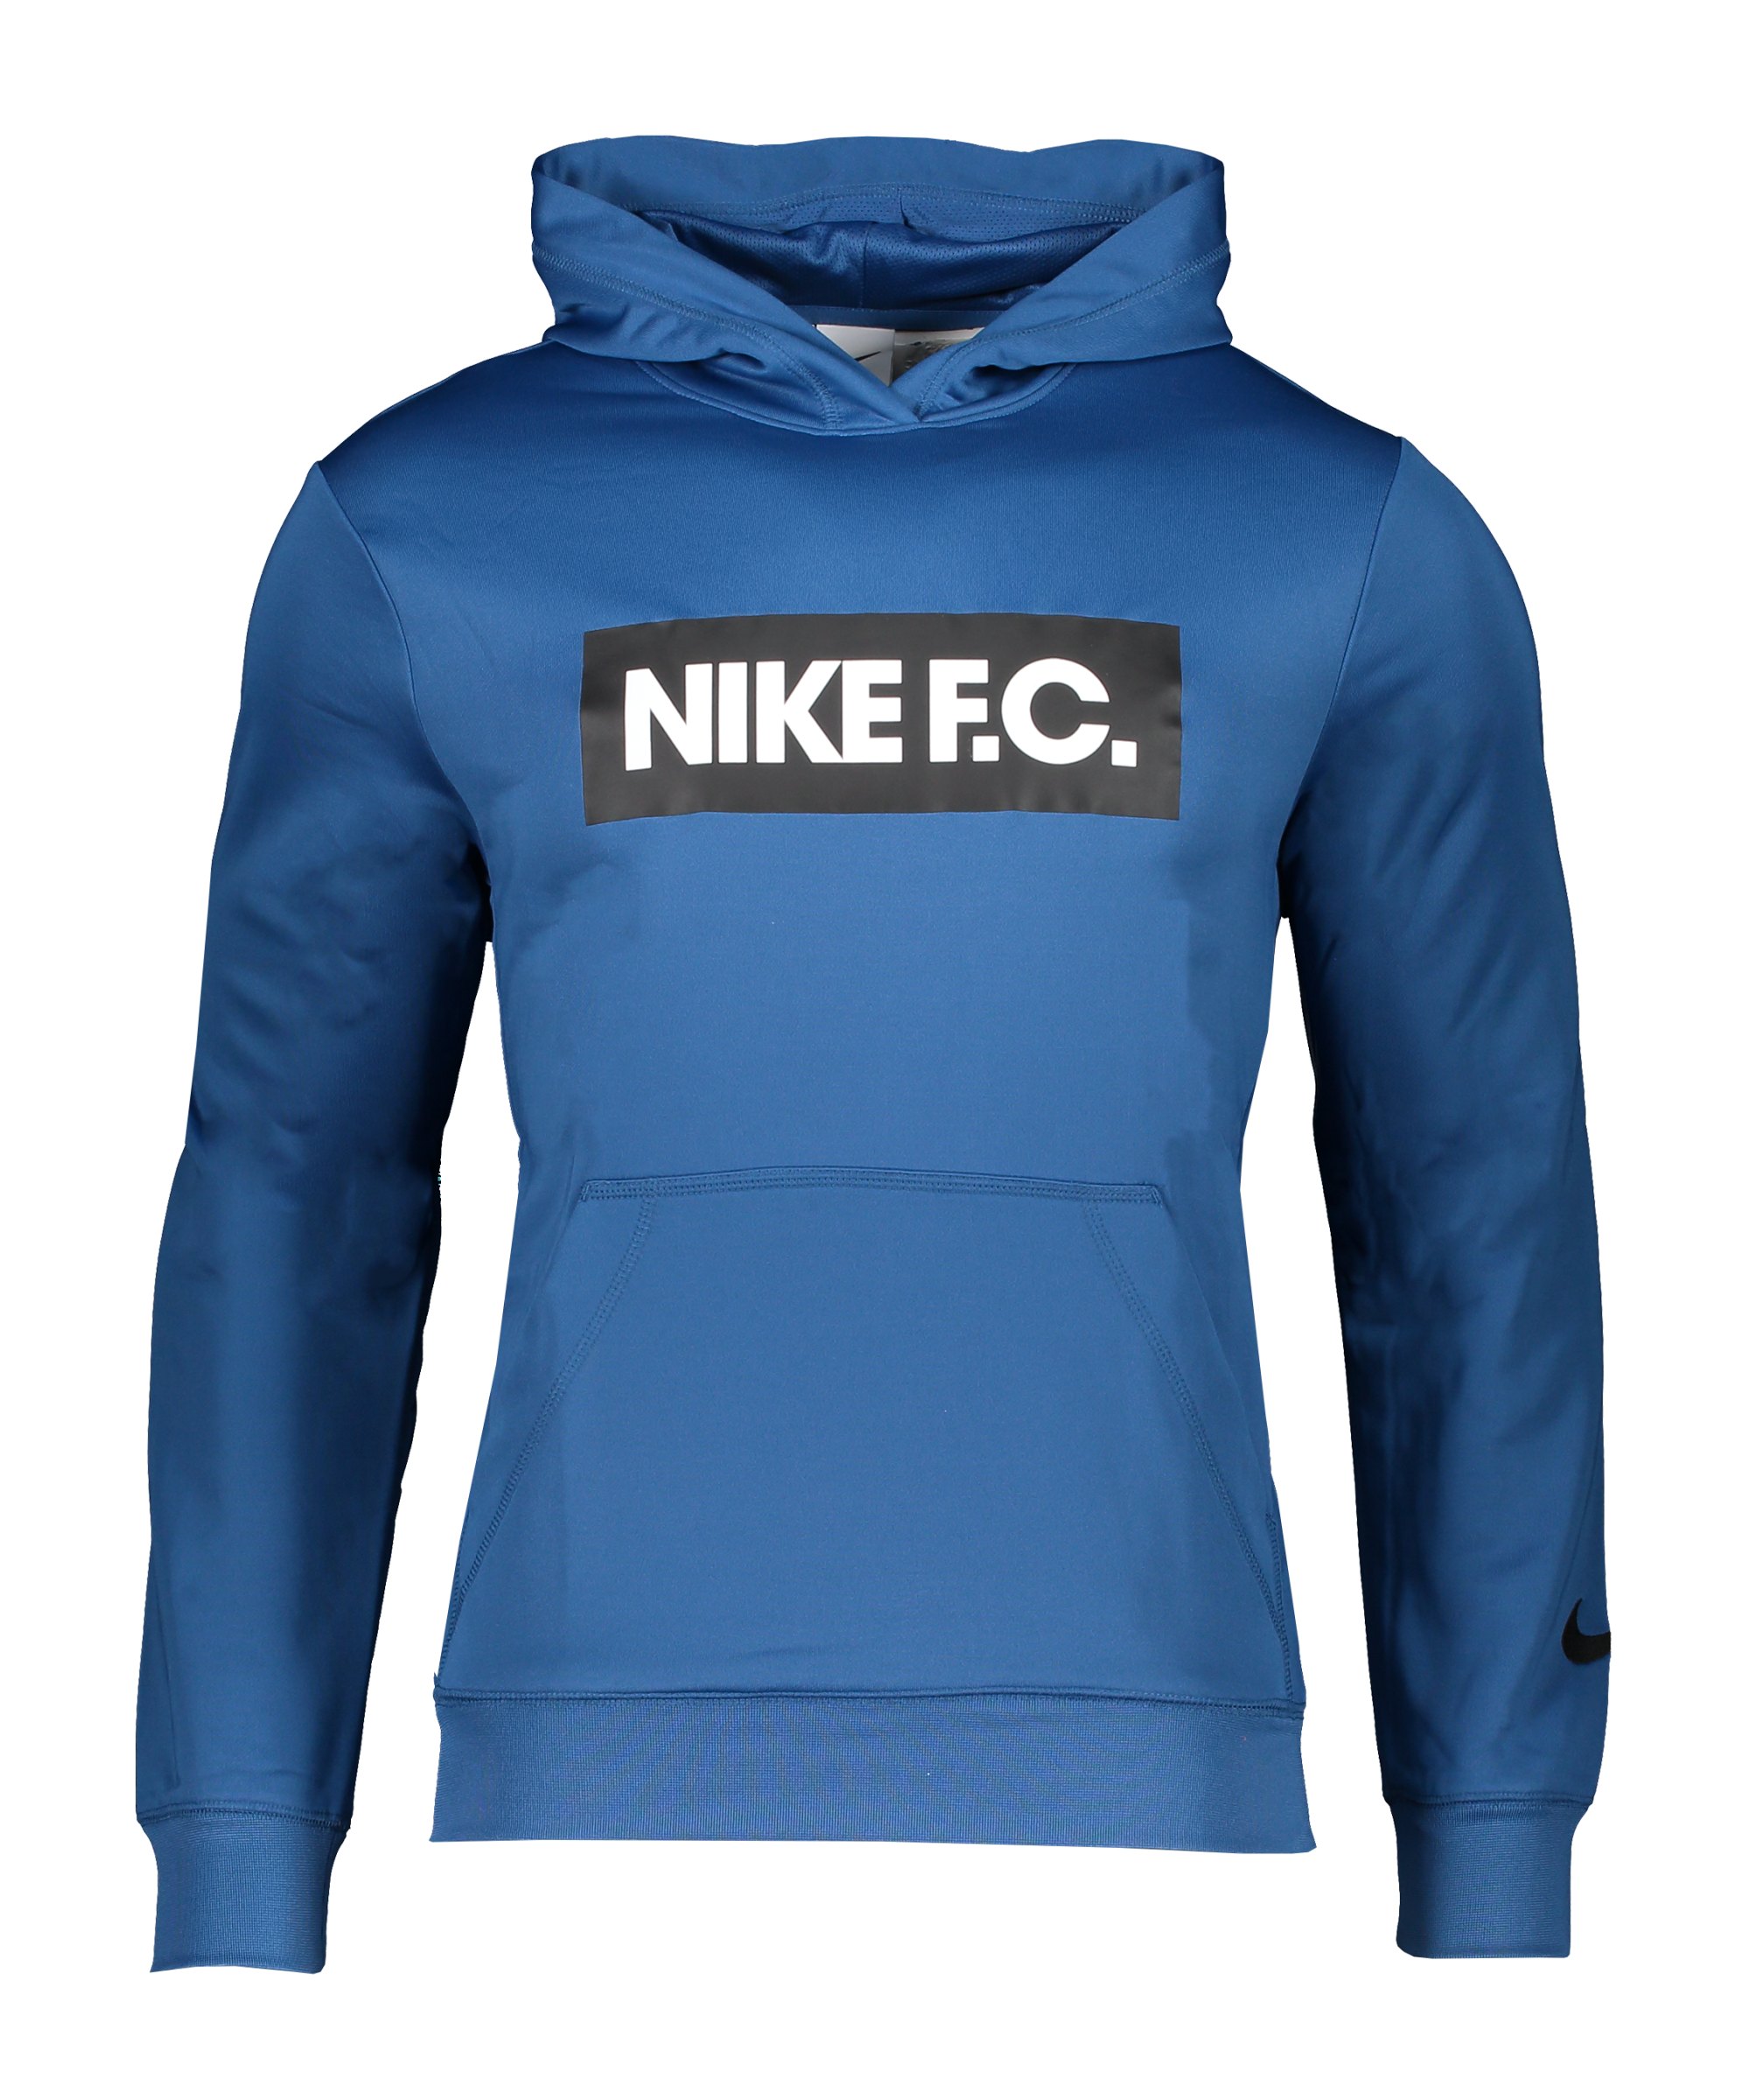 Nike F.C. Hoody Kids Blau Weiss Schwarz F407 - blau